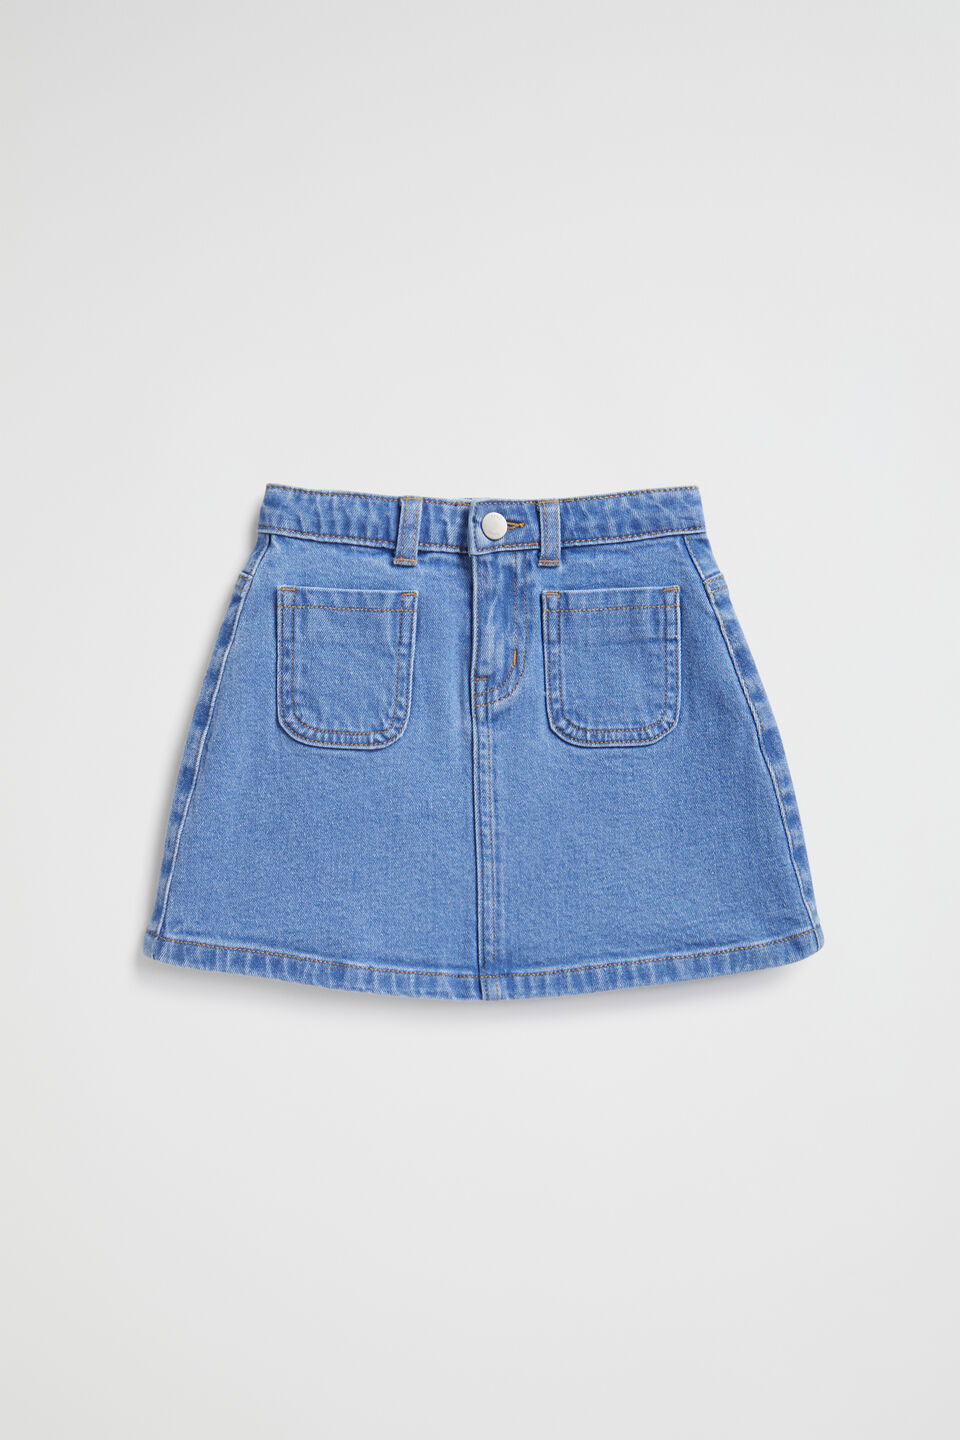 Patch Pocket Denim Skirt  Bright Blue Wash